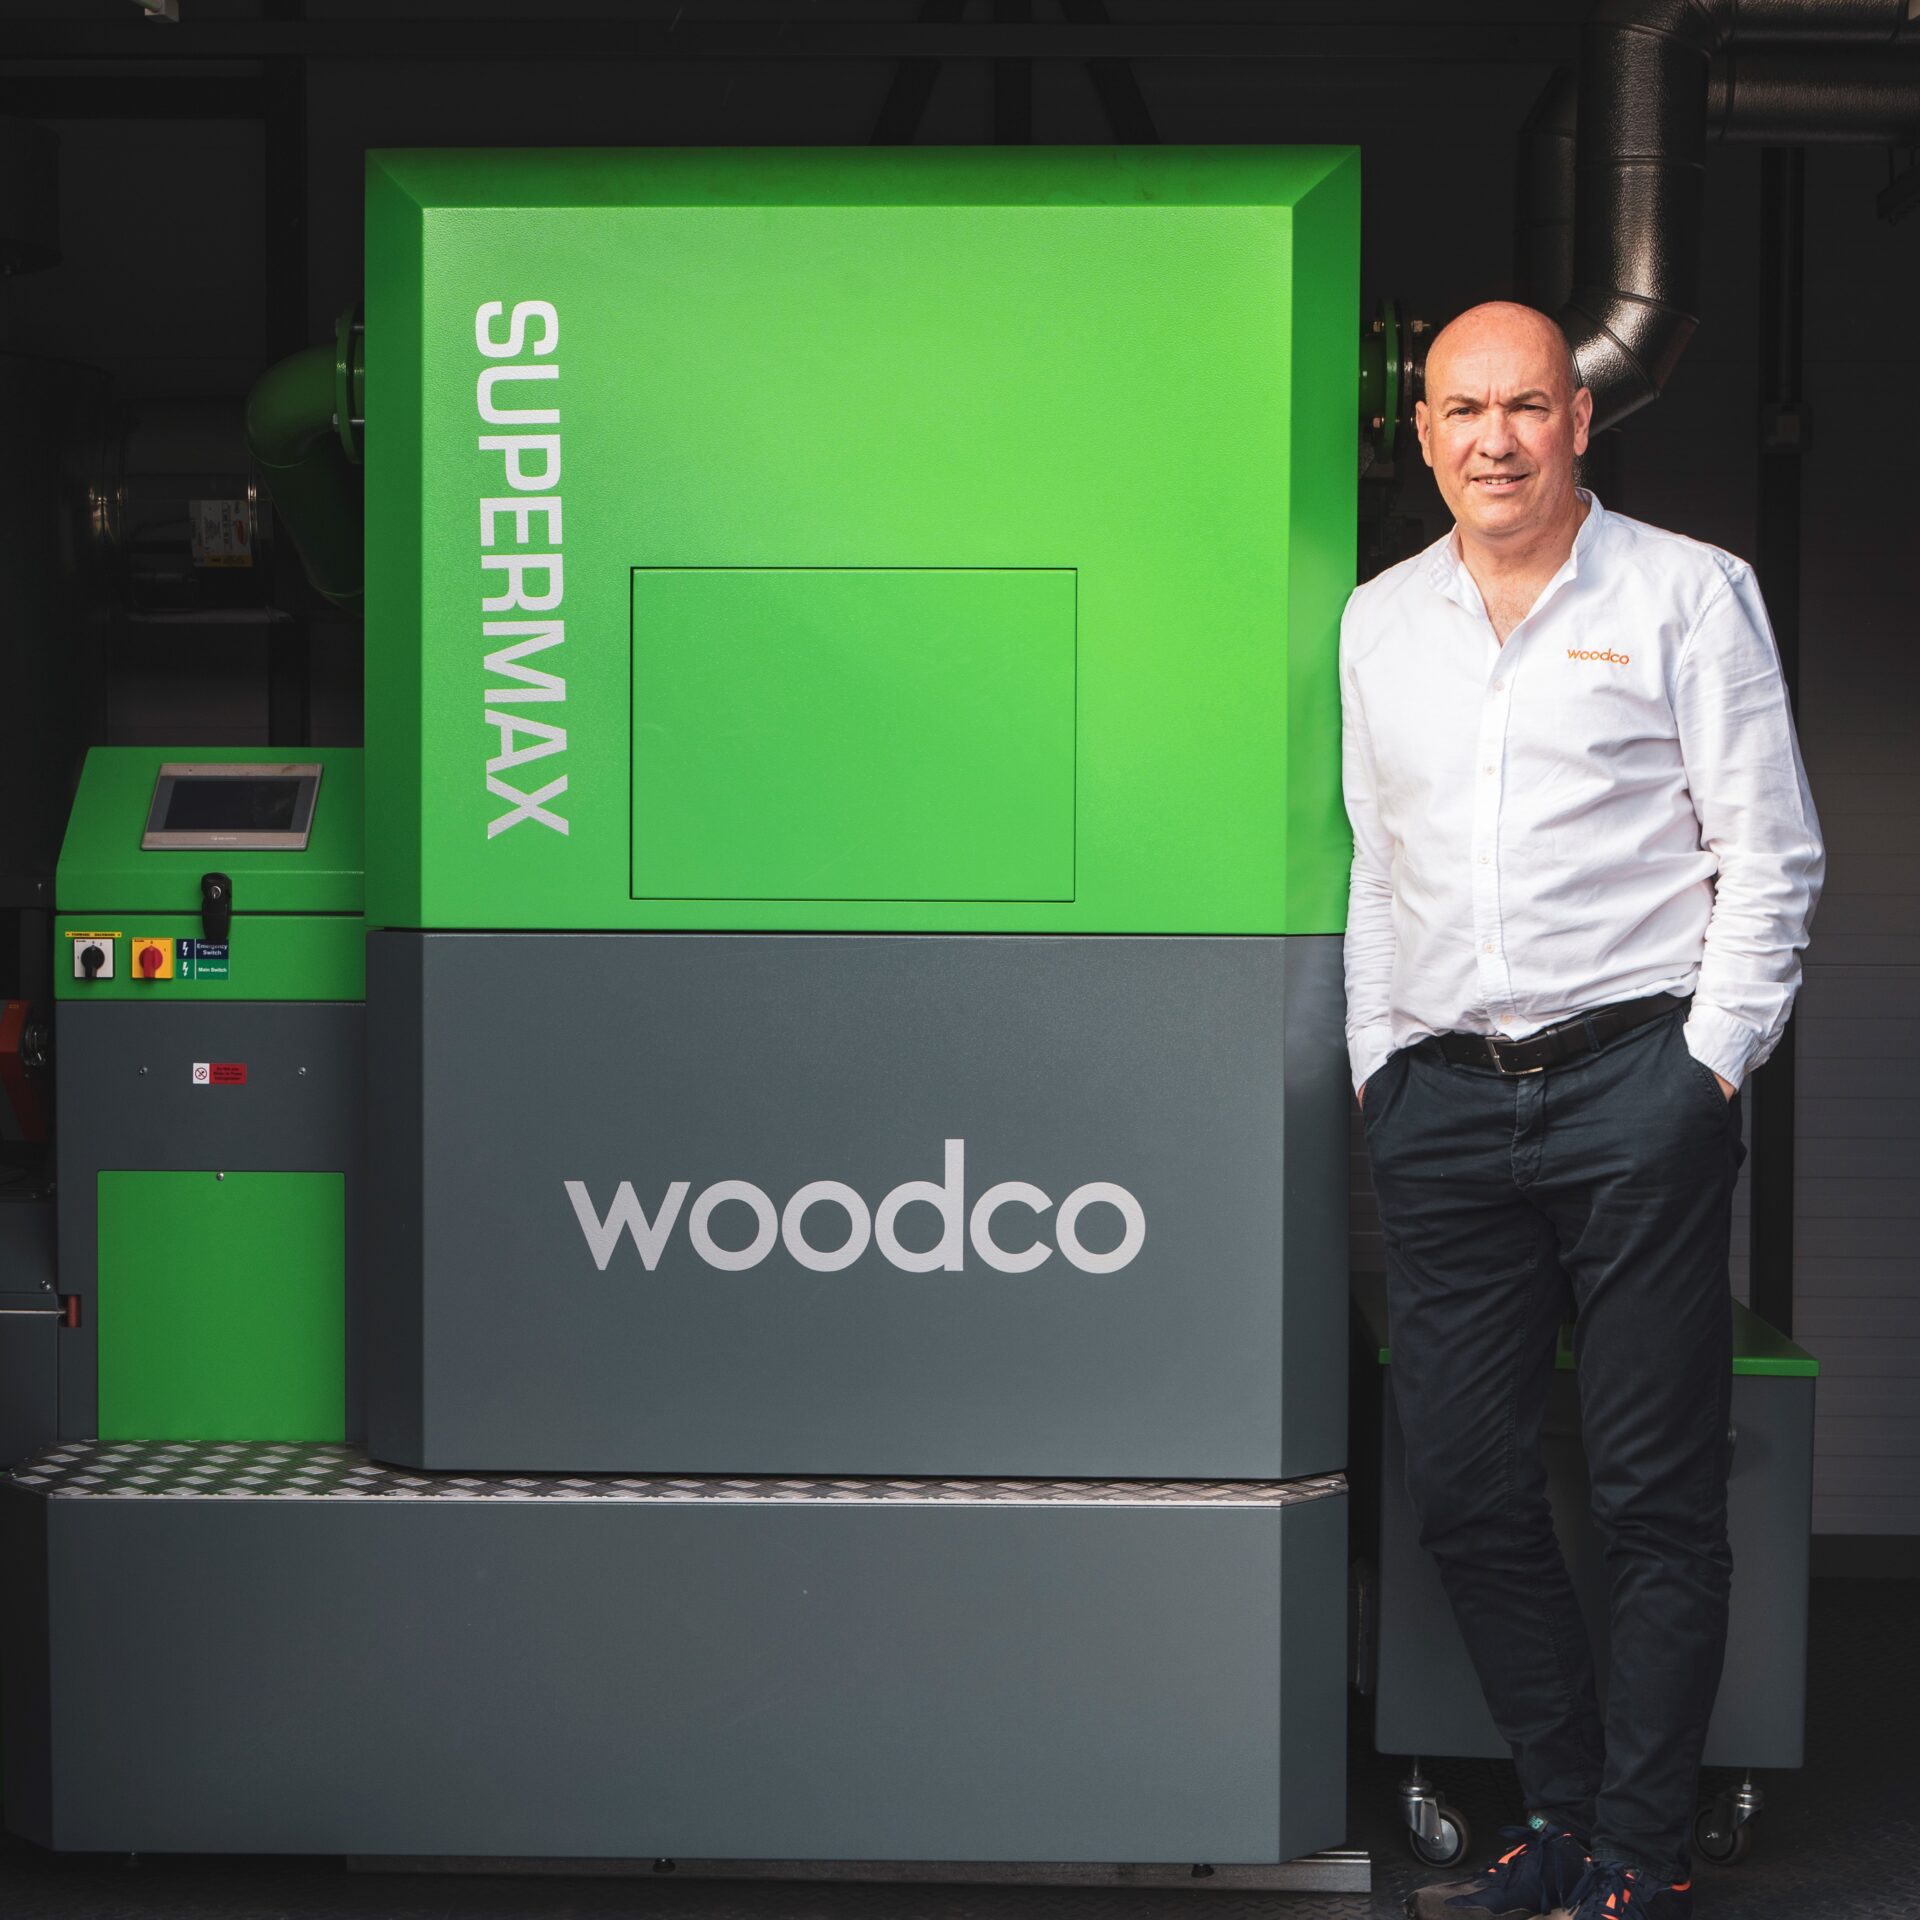 Woodco biomass boiler